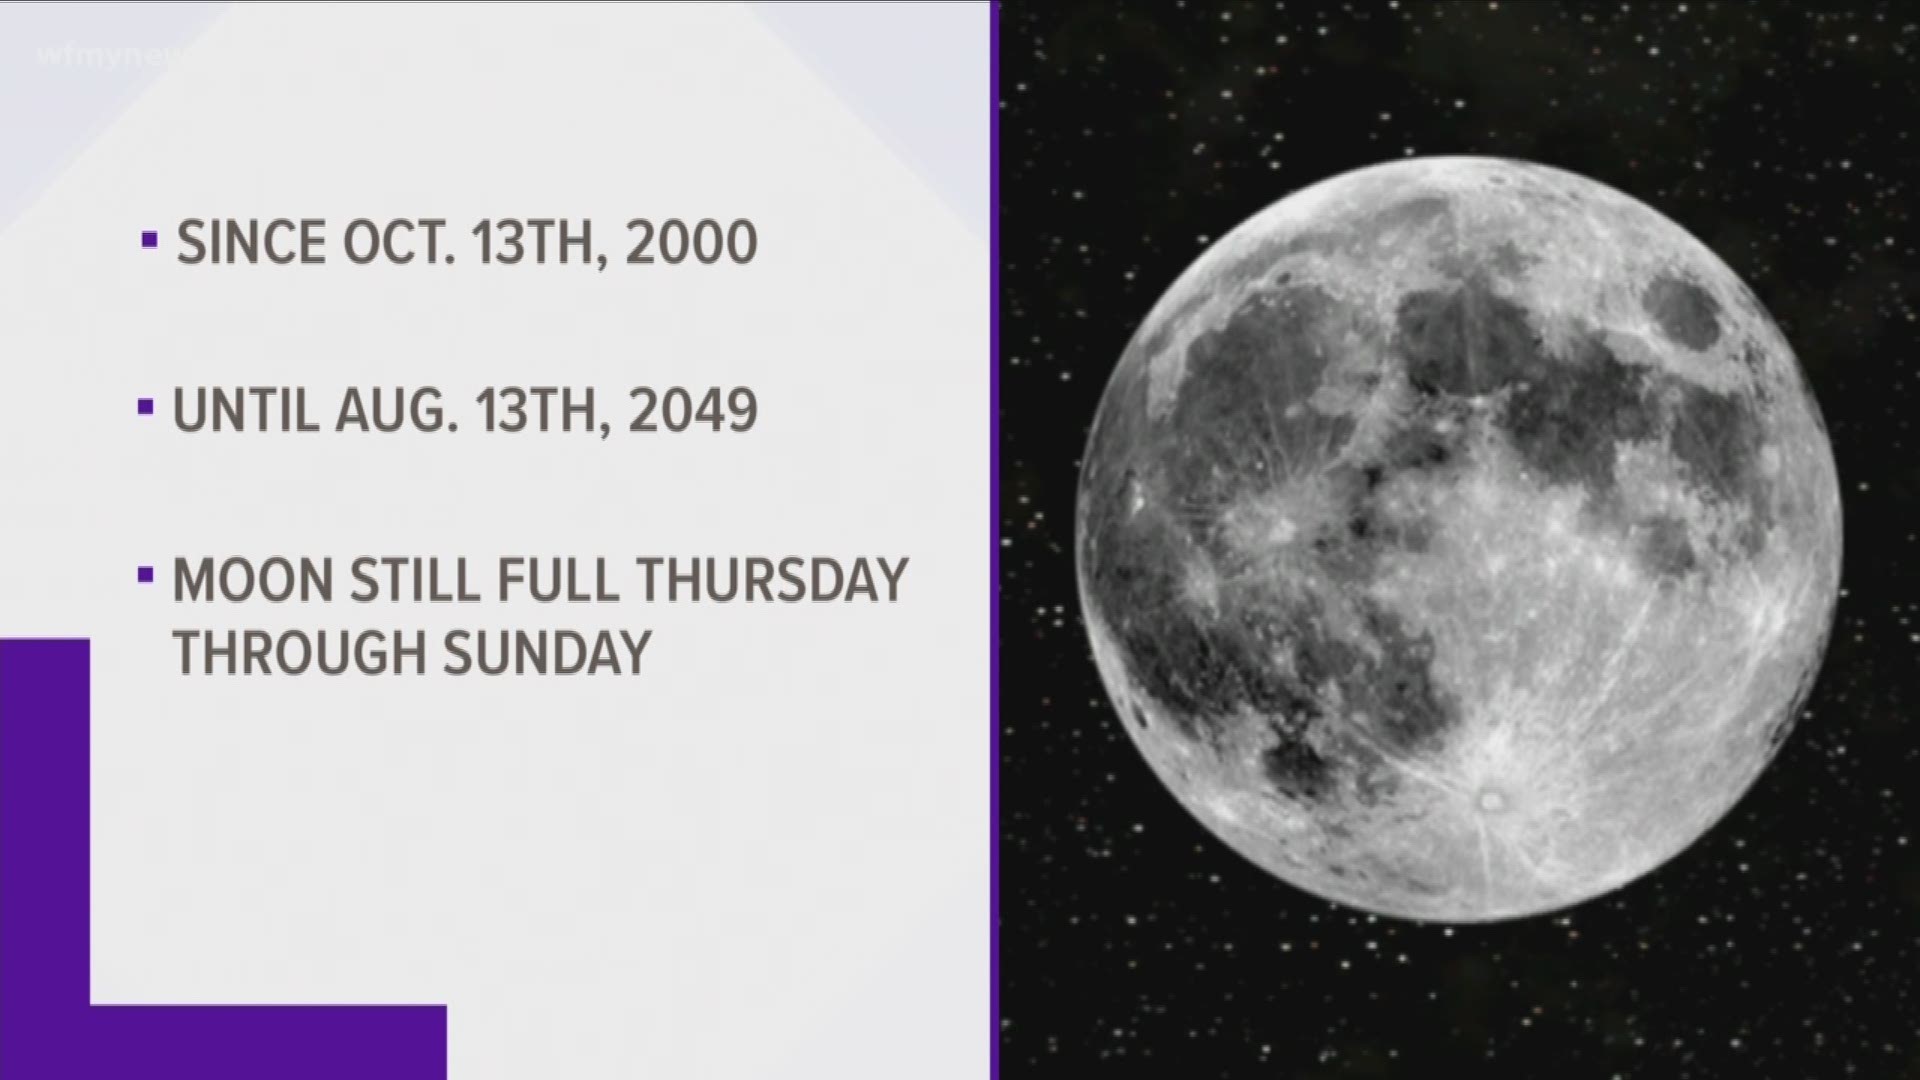 NASA says the  moon will appear full from Thursday night through Sunday morning.